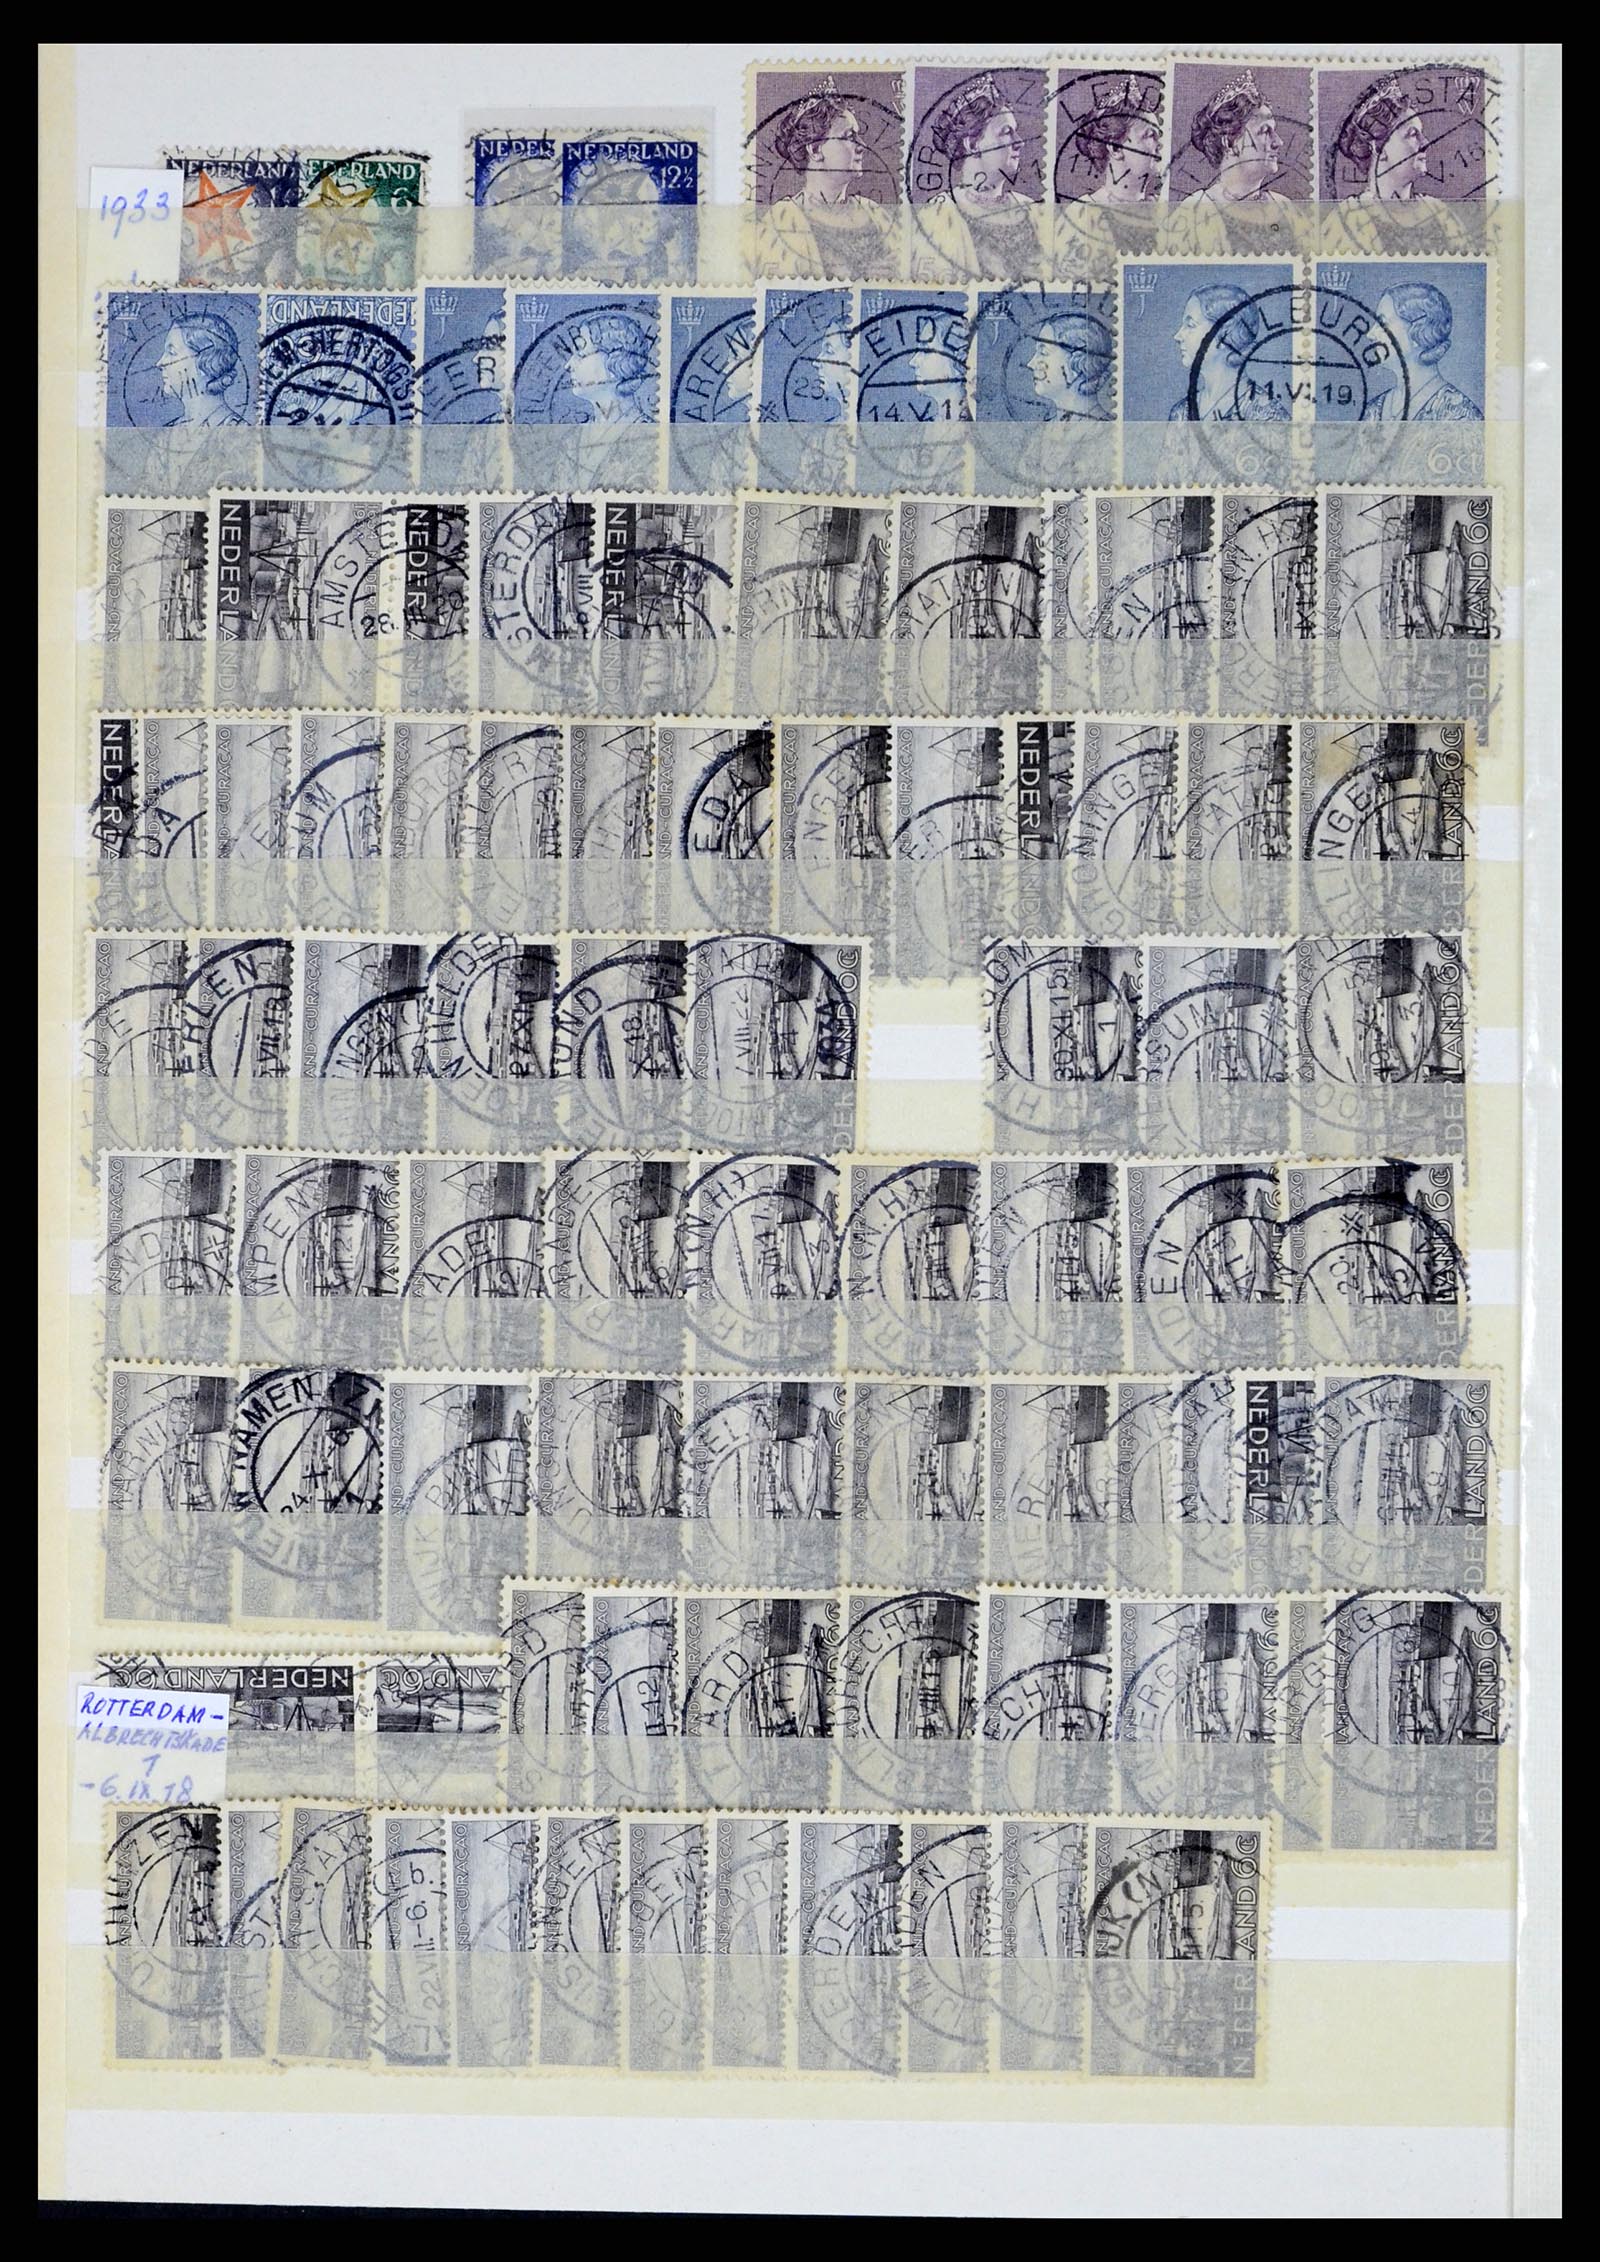 37424 018 - Stamp collection 37424 Netherlands shortbar cancels.